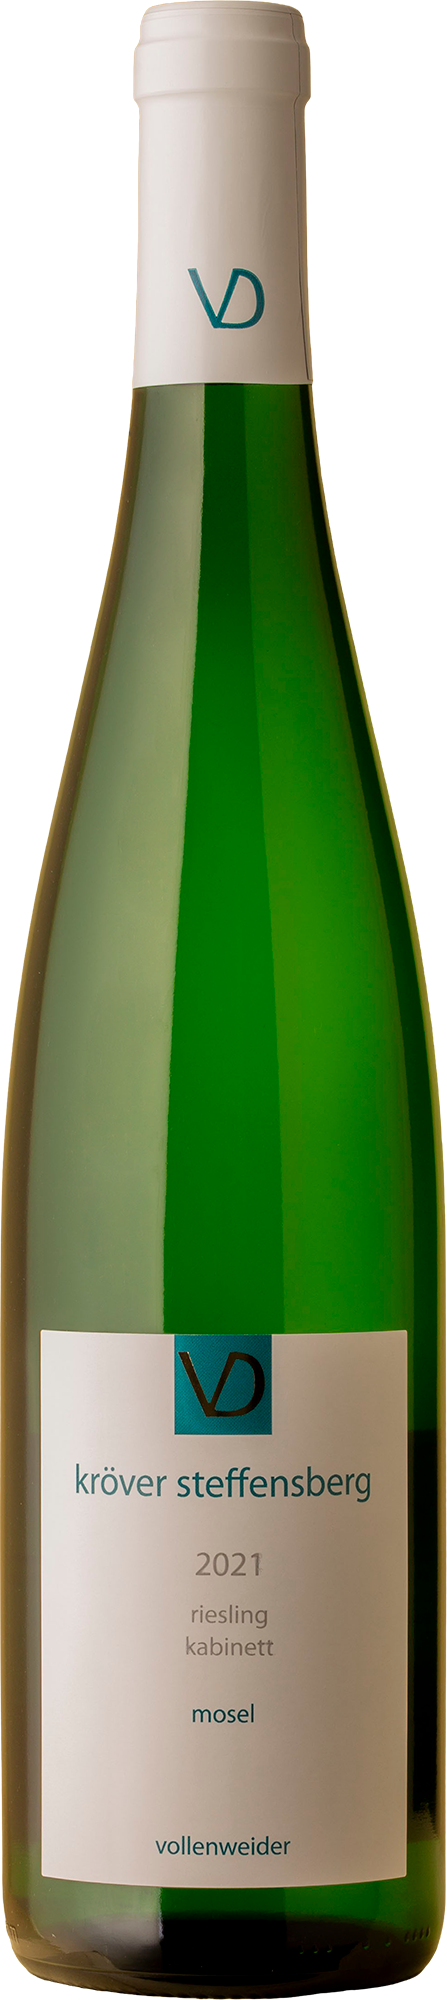 Vollenweider - Kröver Steffensberg Kabinett Riesling 2021 White Wine